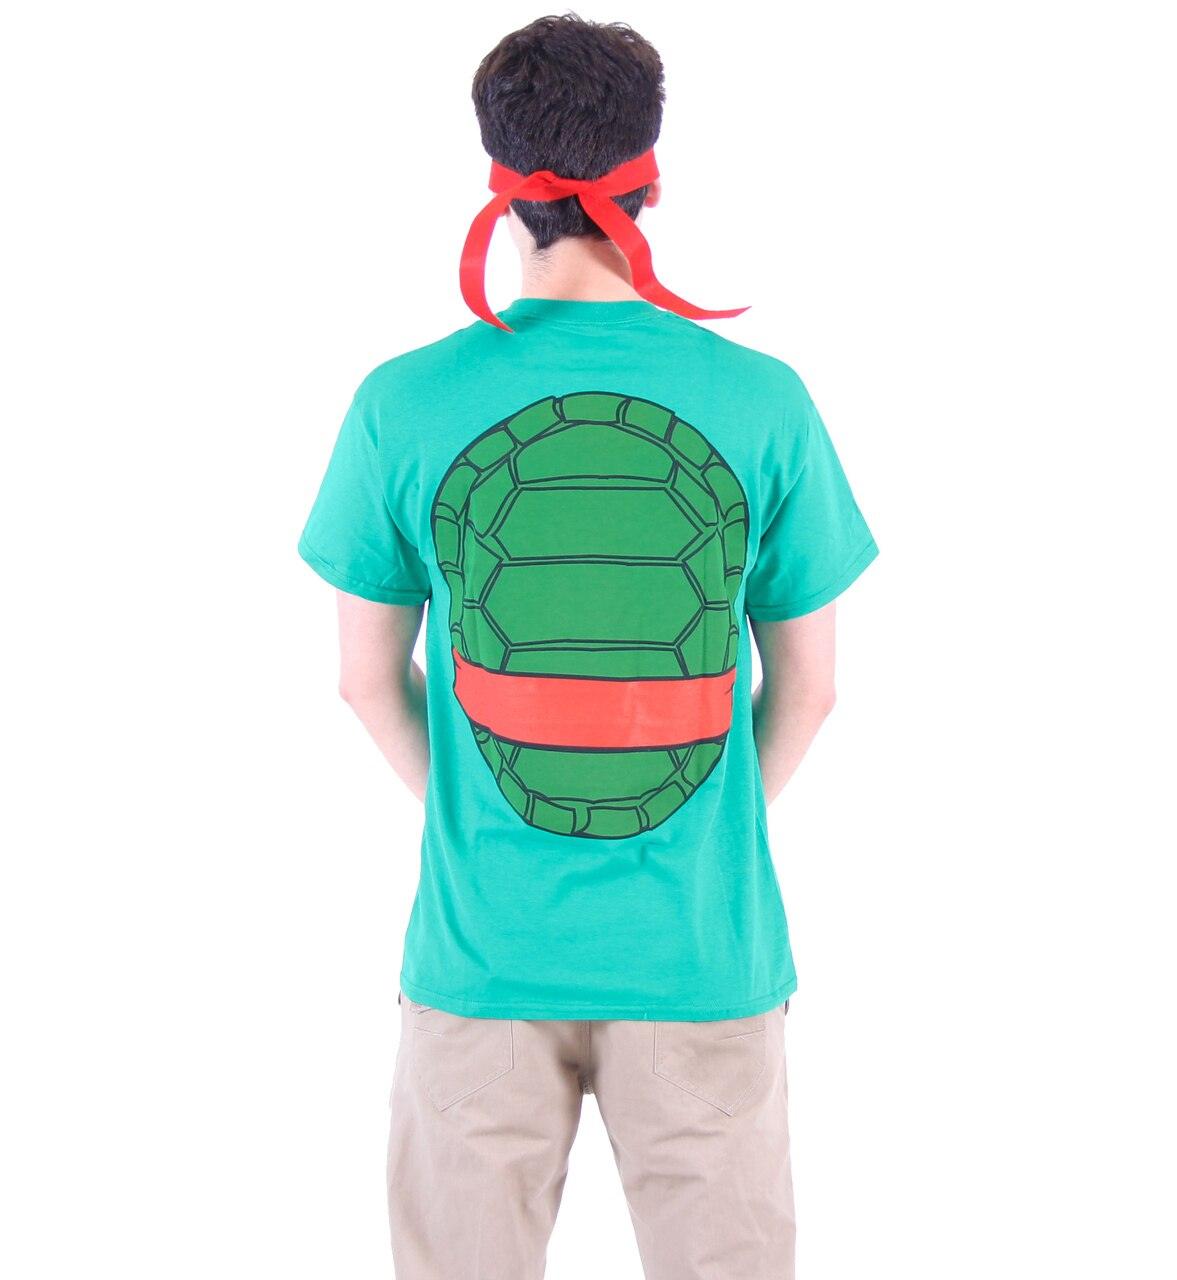 Ninja Turtle T Shirt - Custom Turtle T shirt, The Teehive